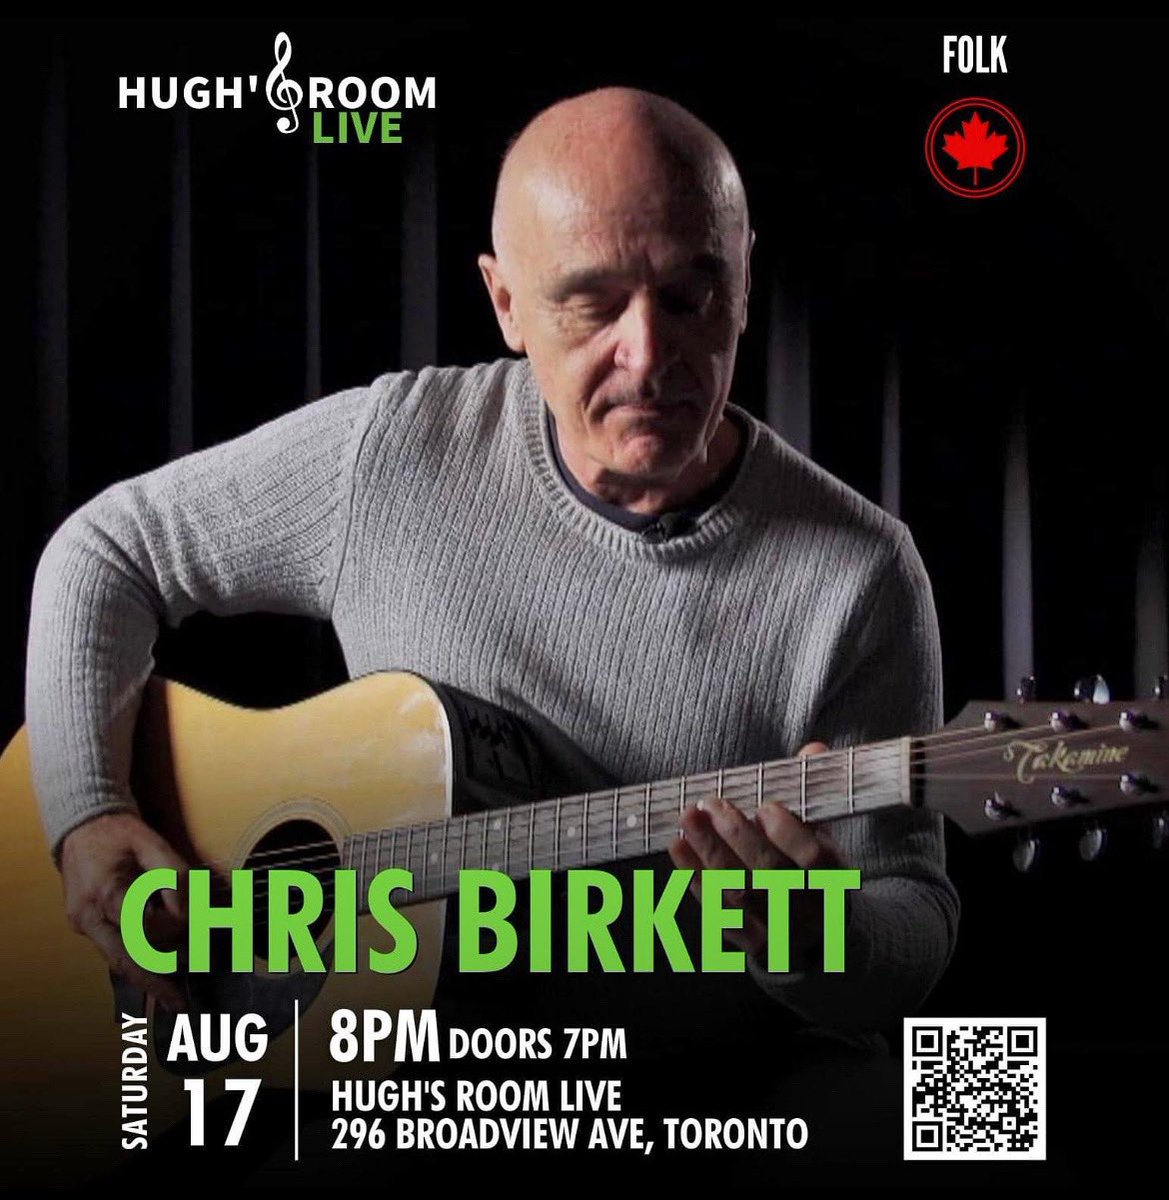 Chris Birkett interview with @JeffSammut on @CanadaTalks167 Chris talks about his up coming album release at Hugh’s Room, Toronto. August 17th. on.soundcloud.com/FpjvVGMzjhzRgH… @siriusxmcanada @ThatEricAlper @1065ELMNTFM @globalnewsto @SineadOConnor @BuffySaint57467 @joanprowse